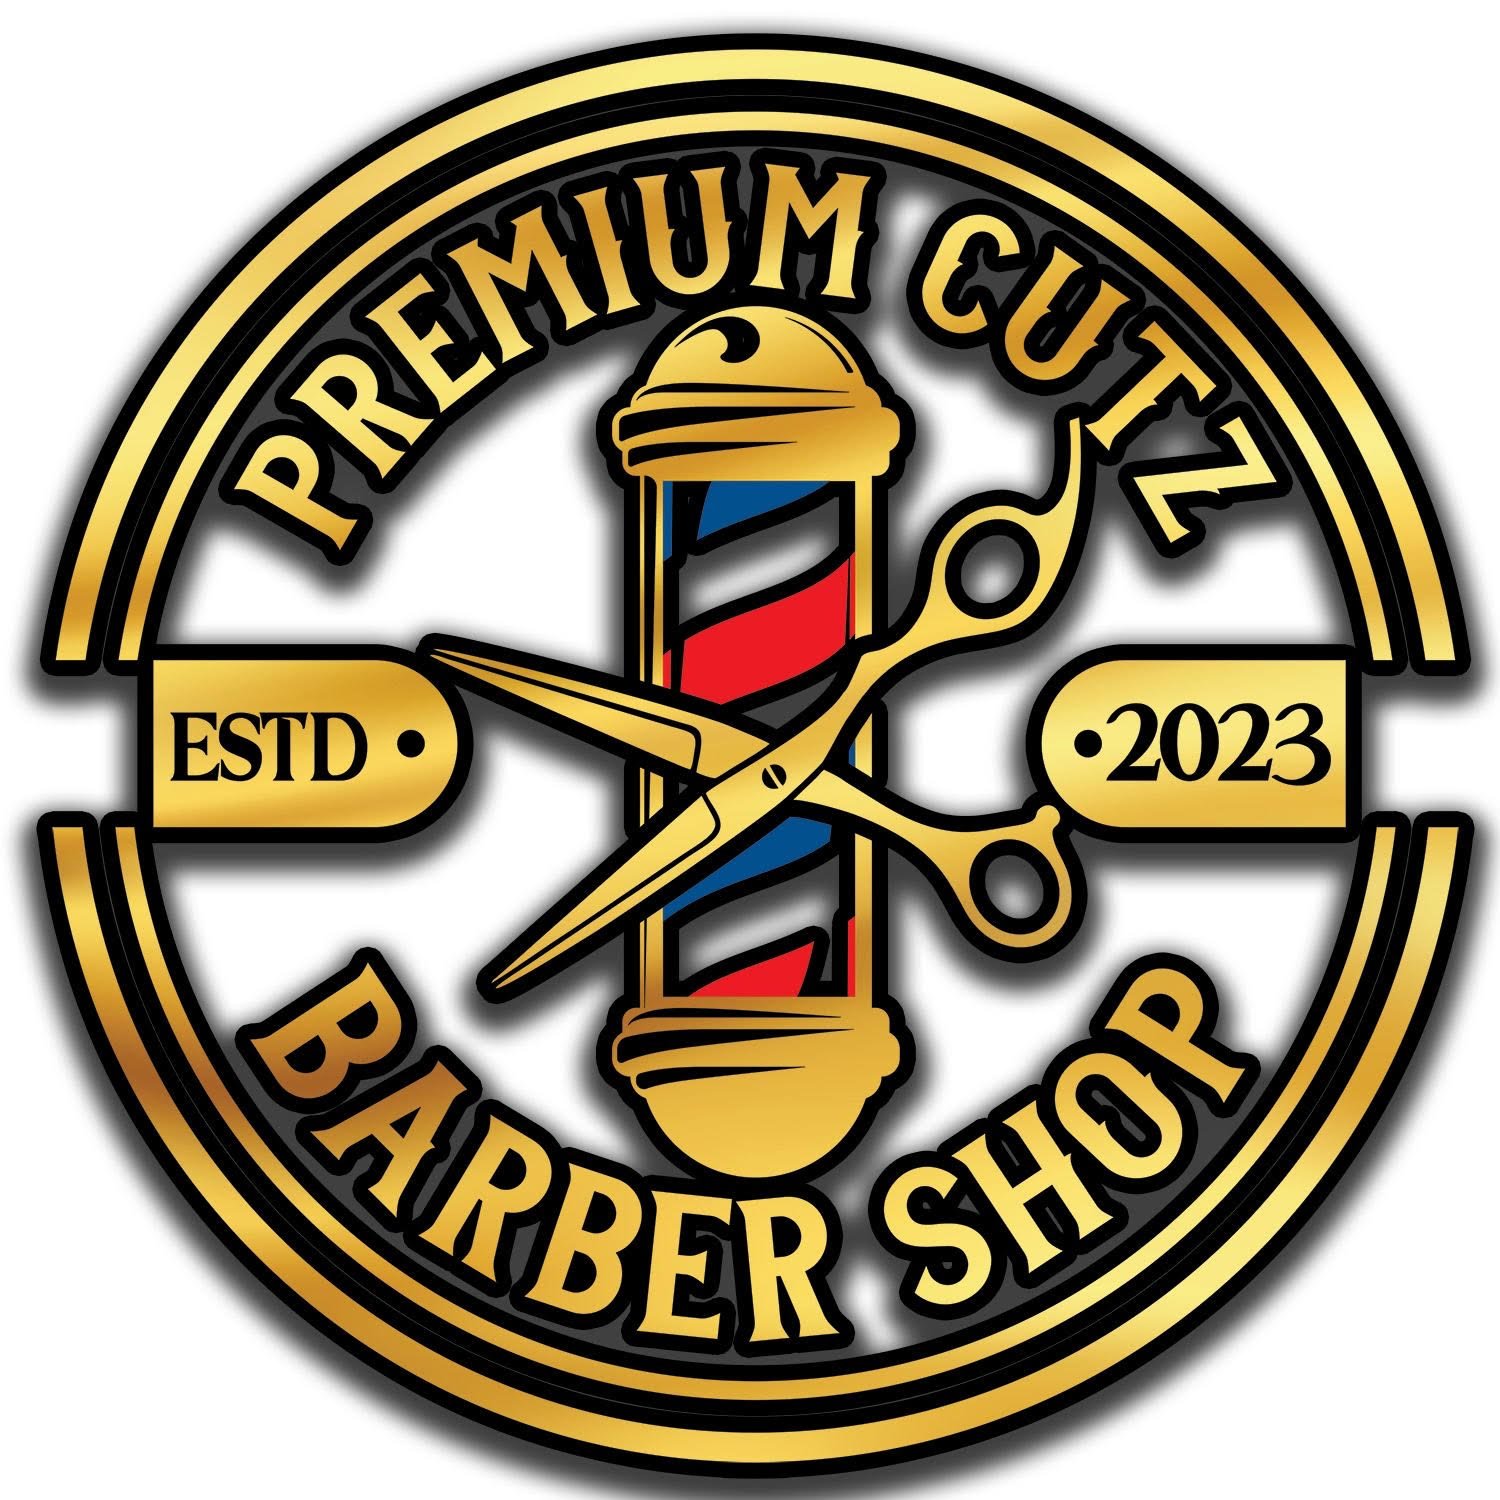 Premium Cutz Barbershop